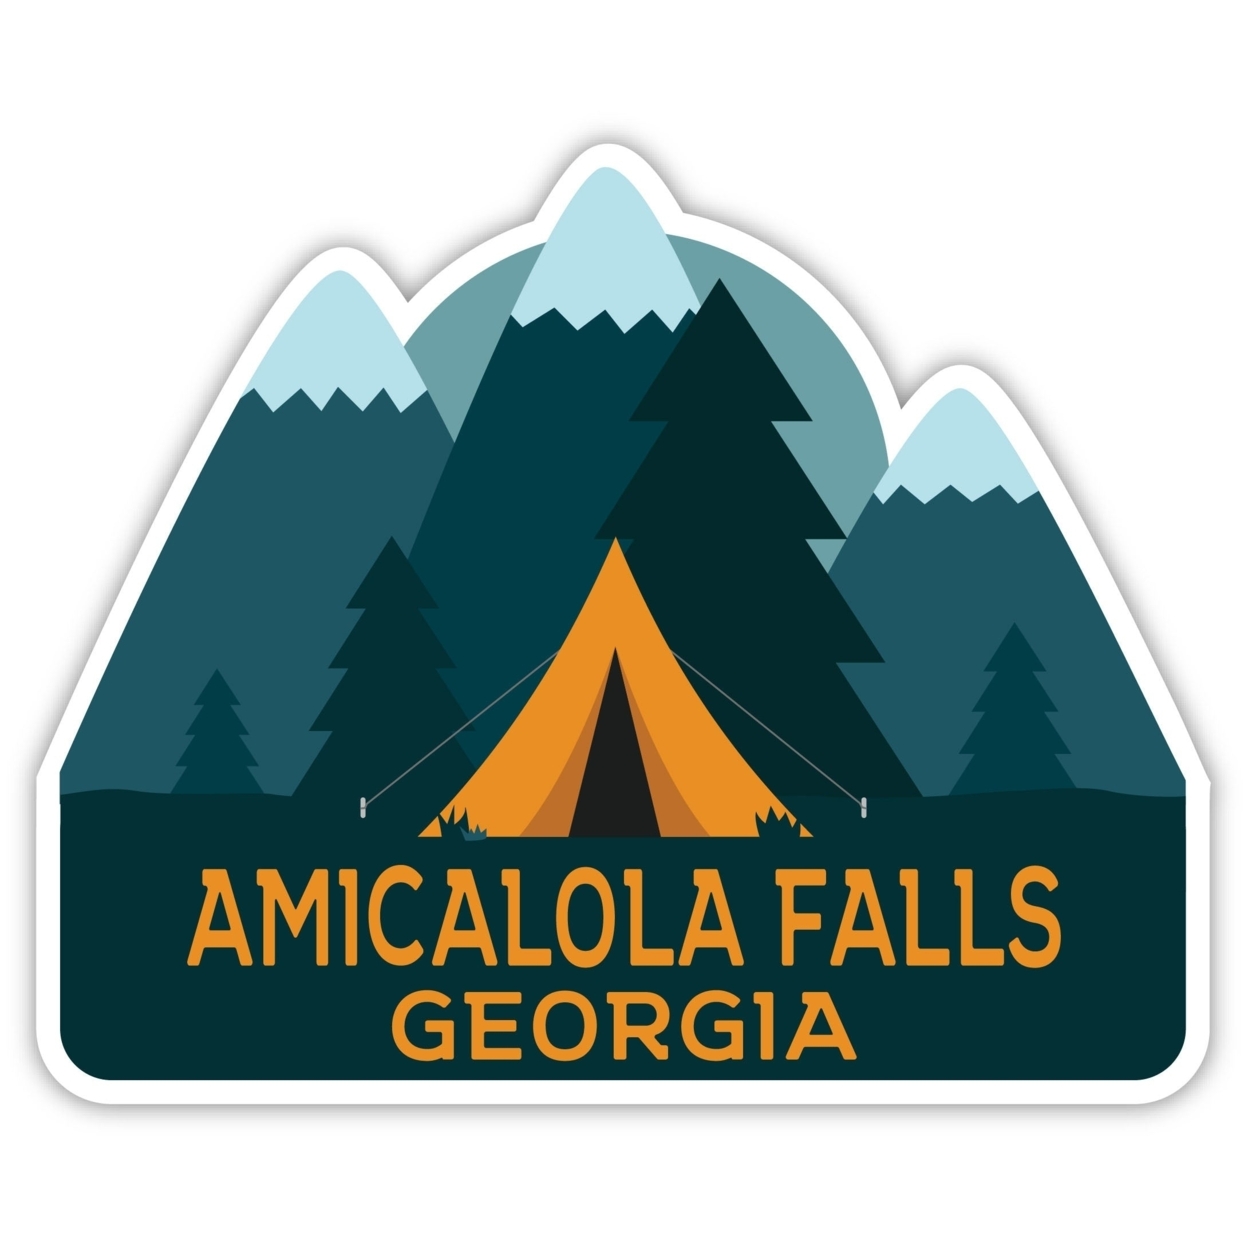 Amicalola Falls Georgia Souvenir Decorative Stickers (Choose Theme And Size) - 4-Pack, 4-Inch, Tent